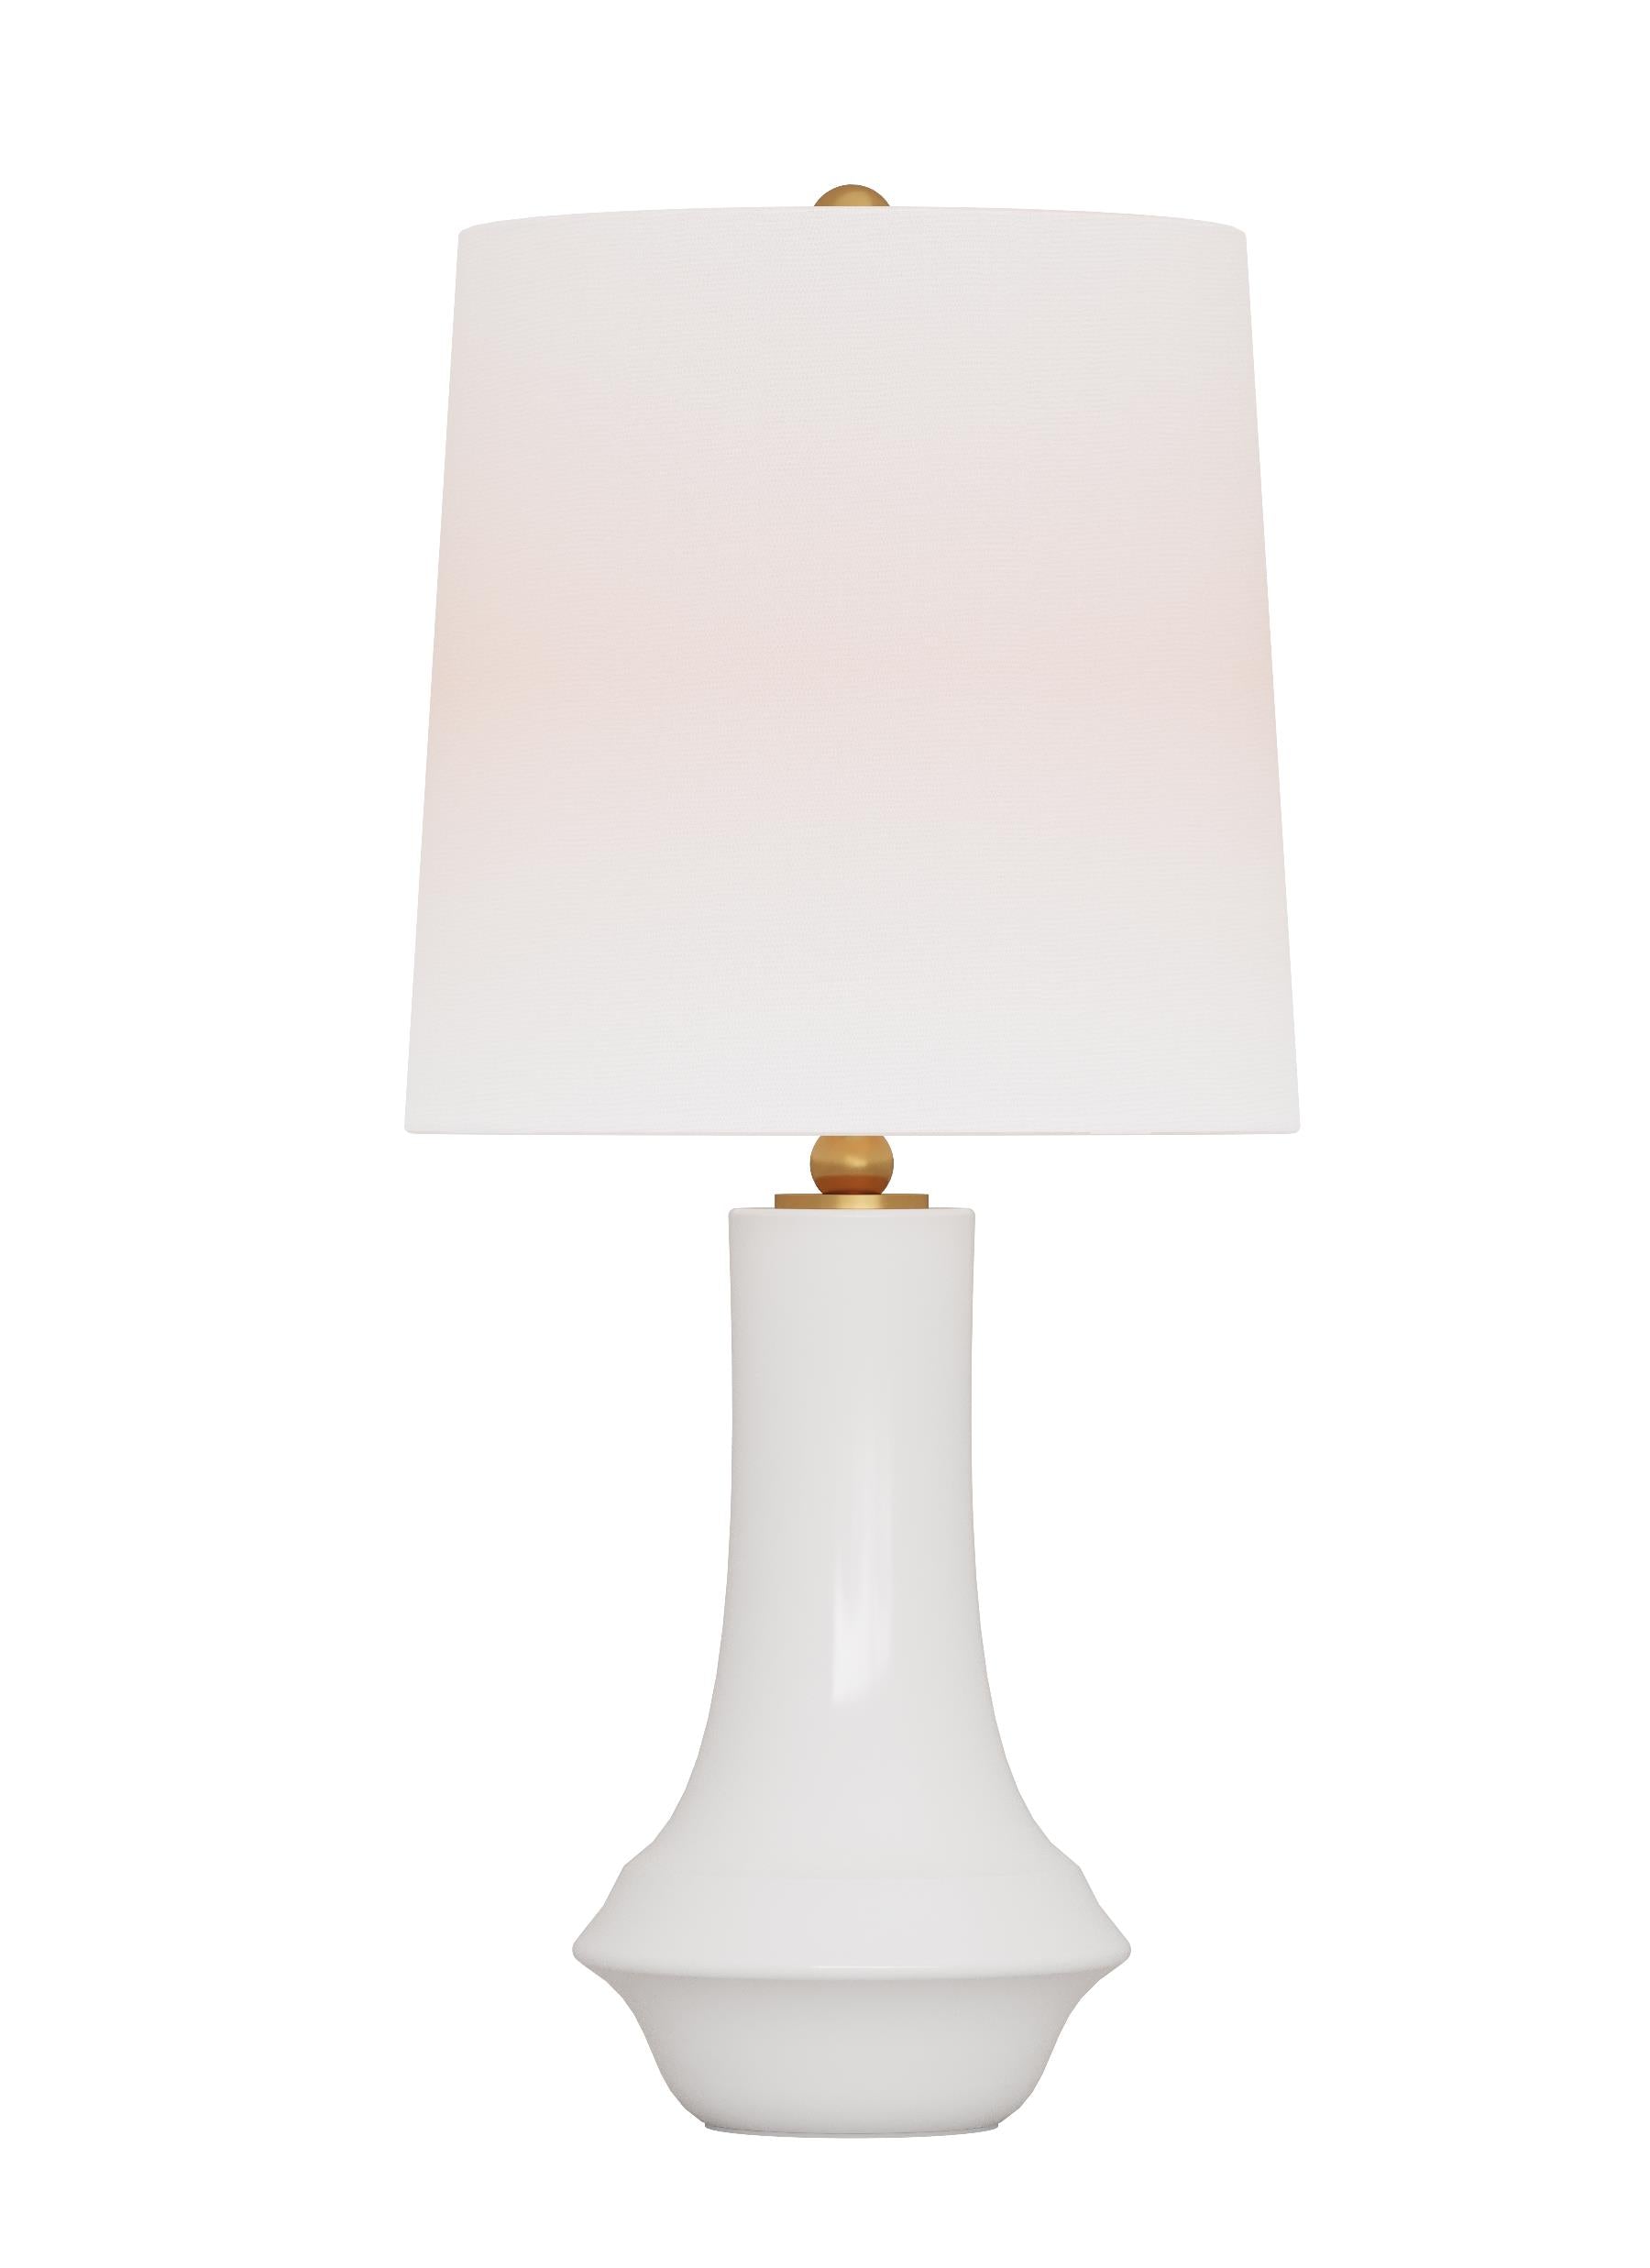 JENNA 1L table lamp, New White - TT1231NWH1